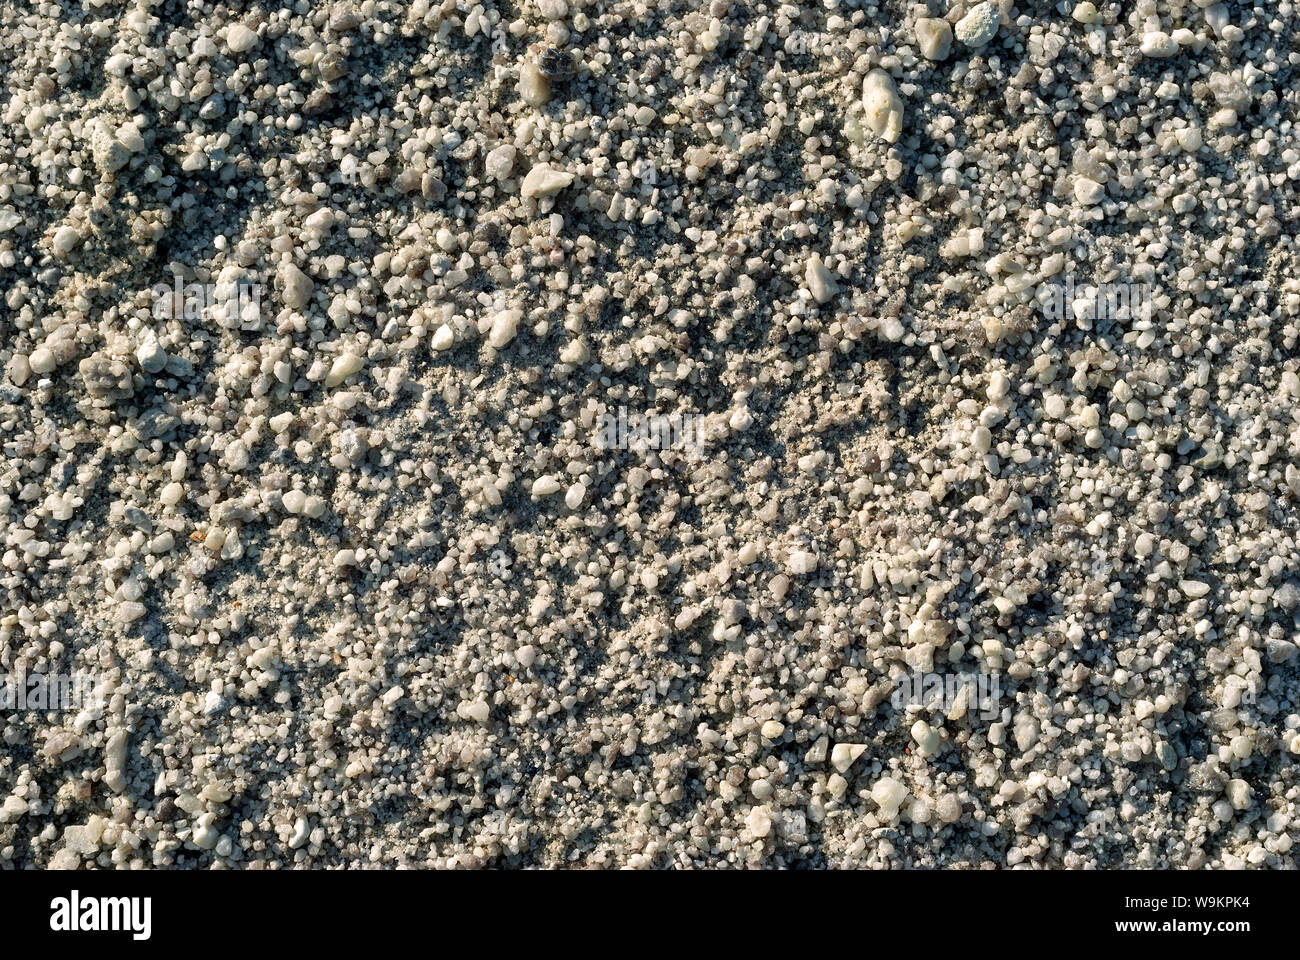 background, texture - fine gravel, or gypsum, or mineral salt Stock Photo